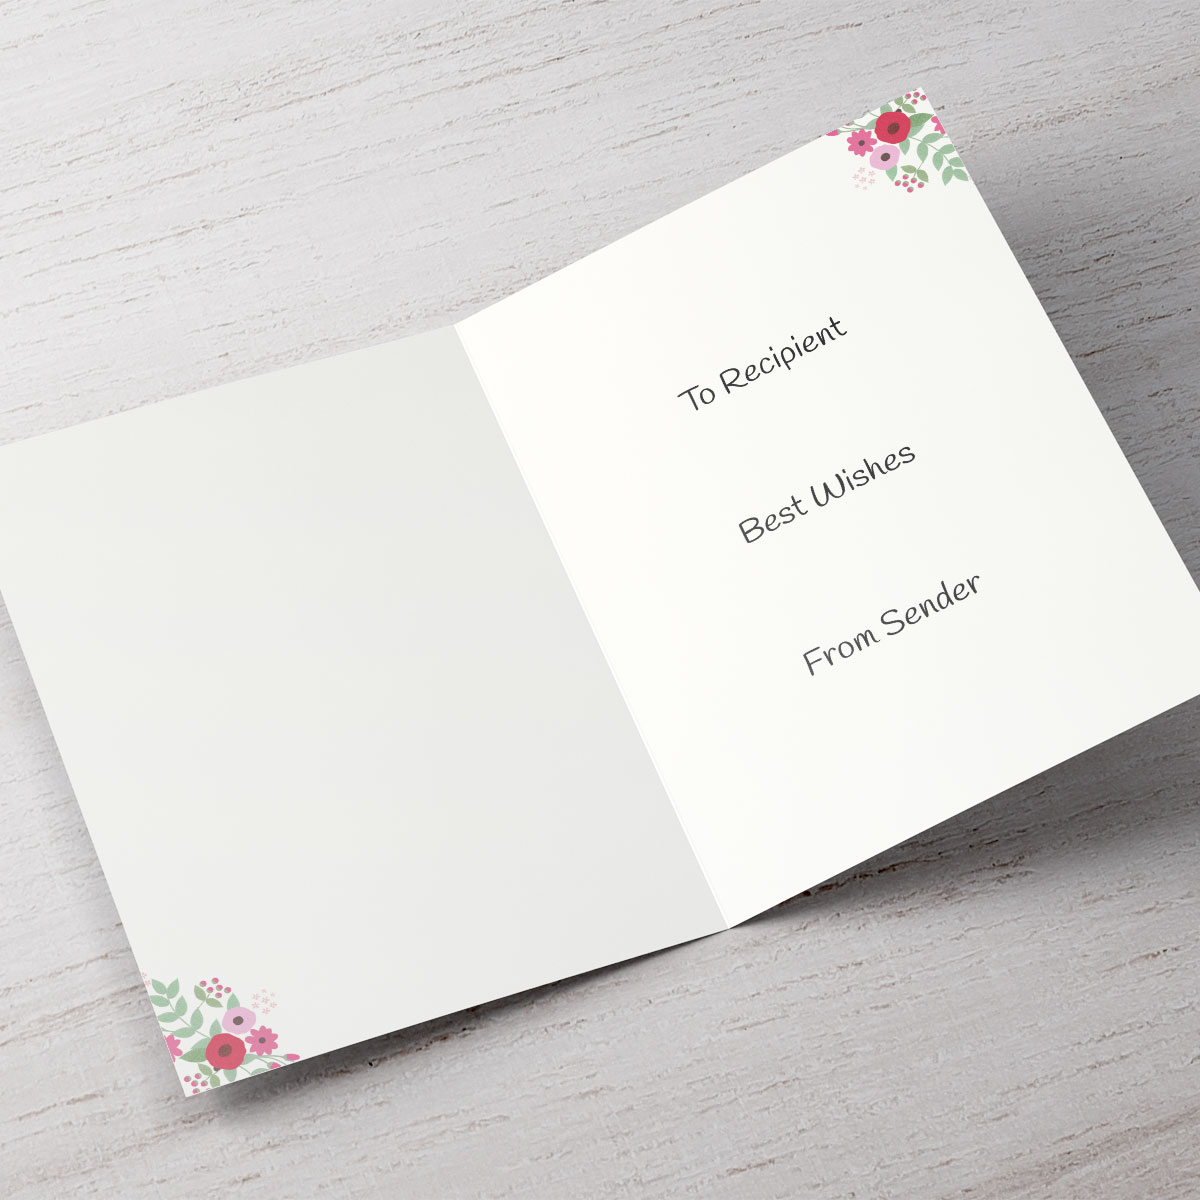 Personalised Wedding Card - Be My Bridesmaid Floral